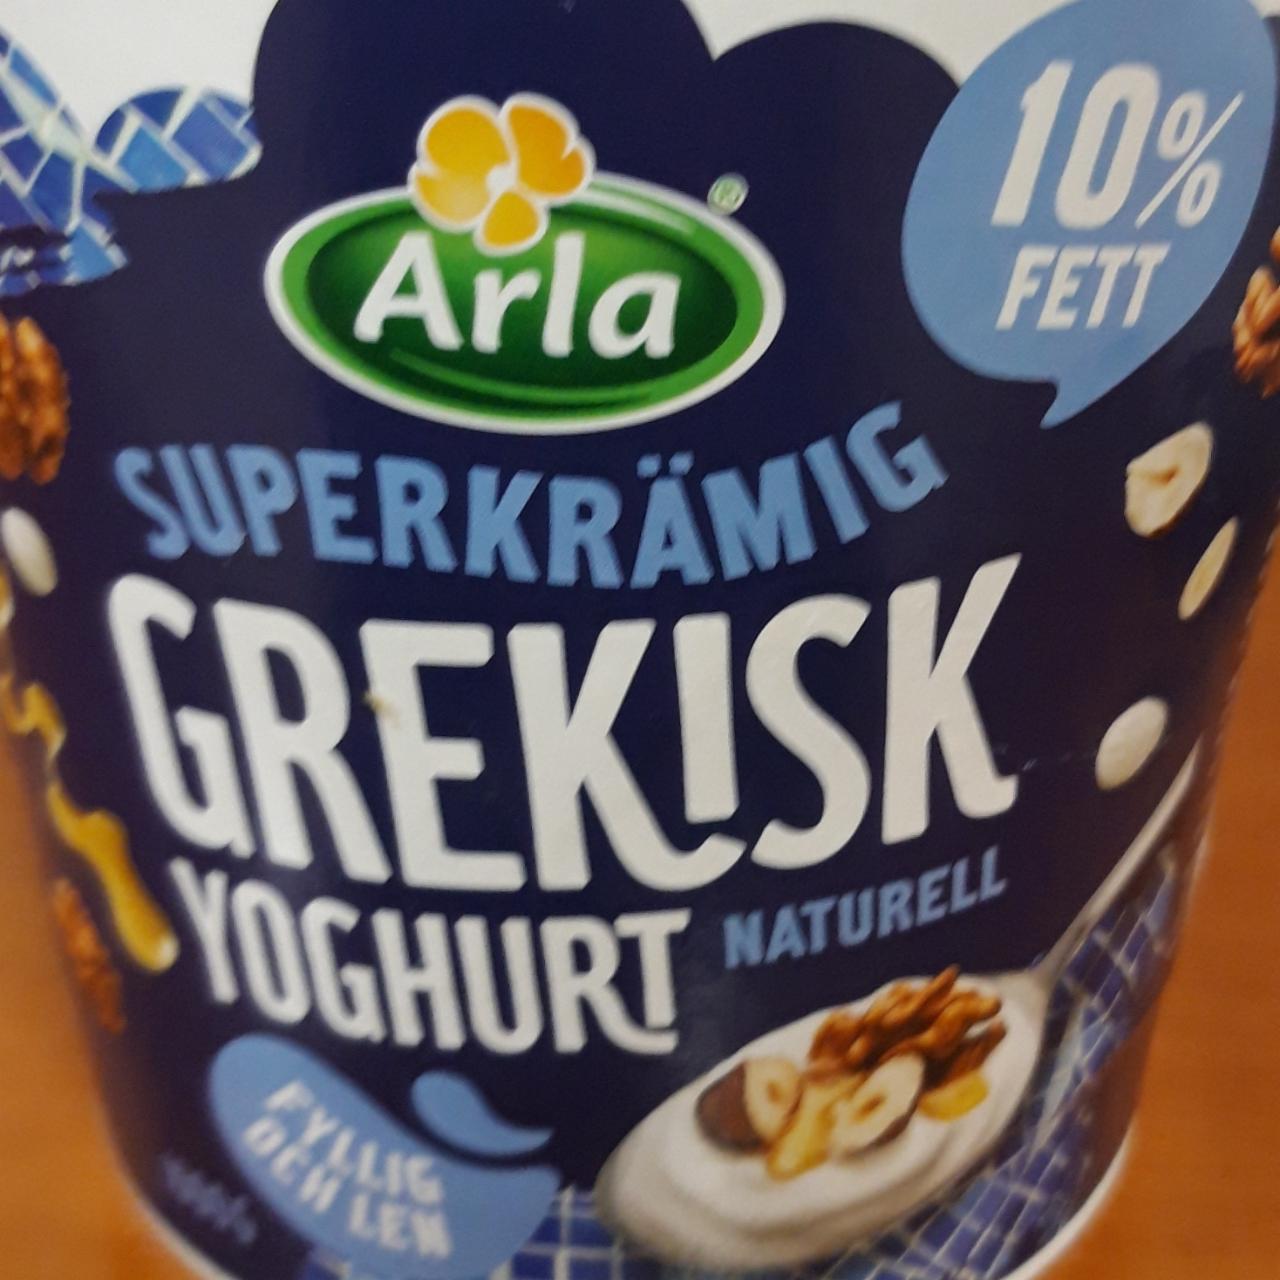 Fotografie - Superkrämig Grekisk yoghurt Naturell Arla